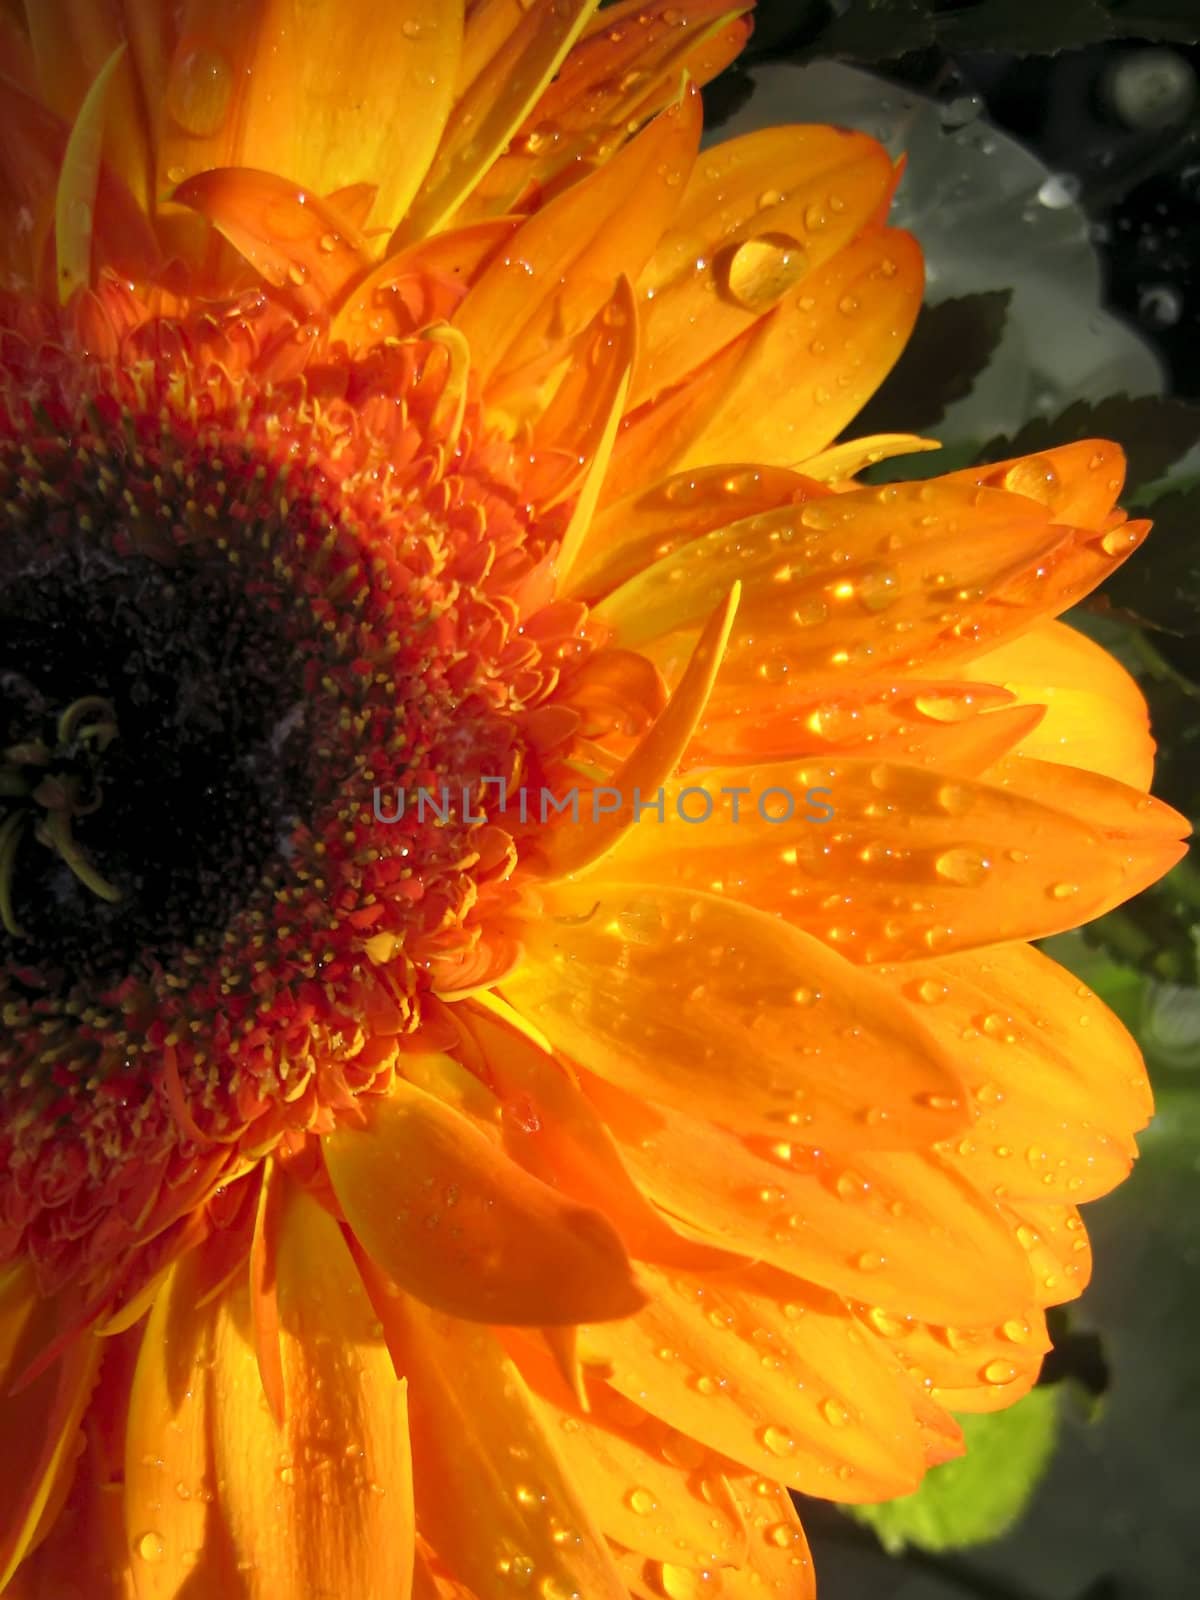 The orange flower after rain